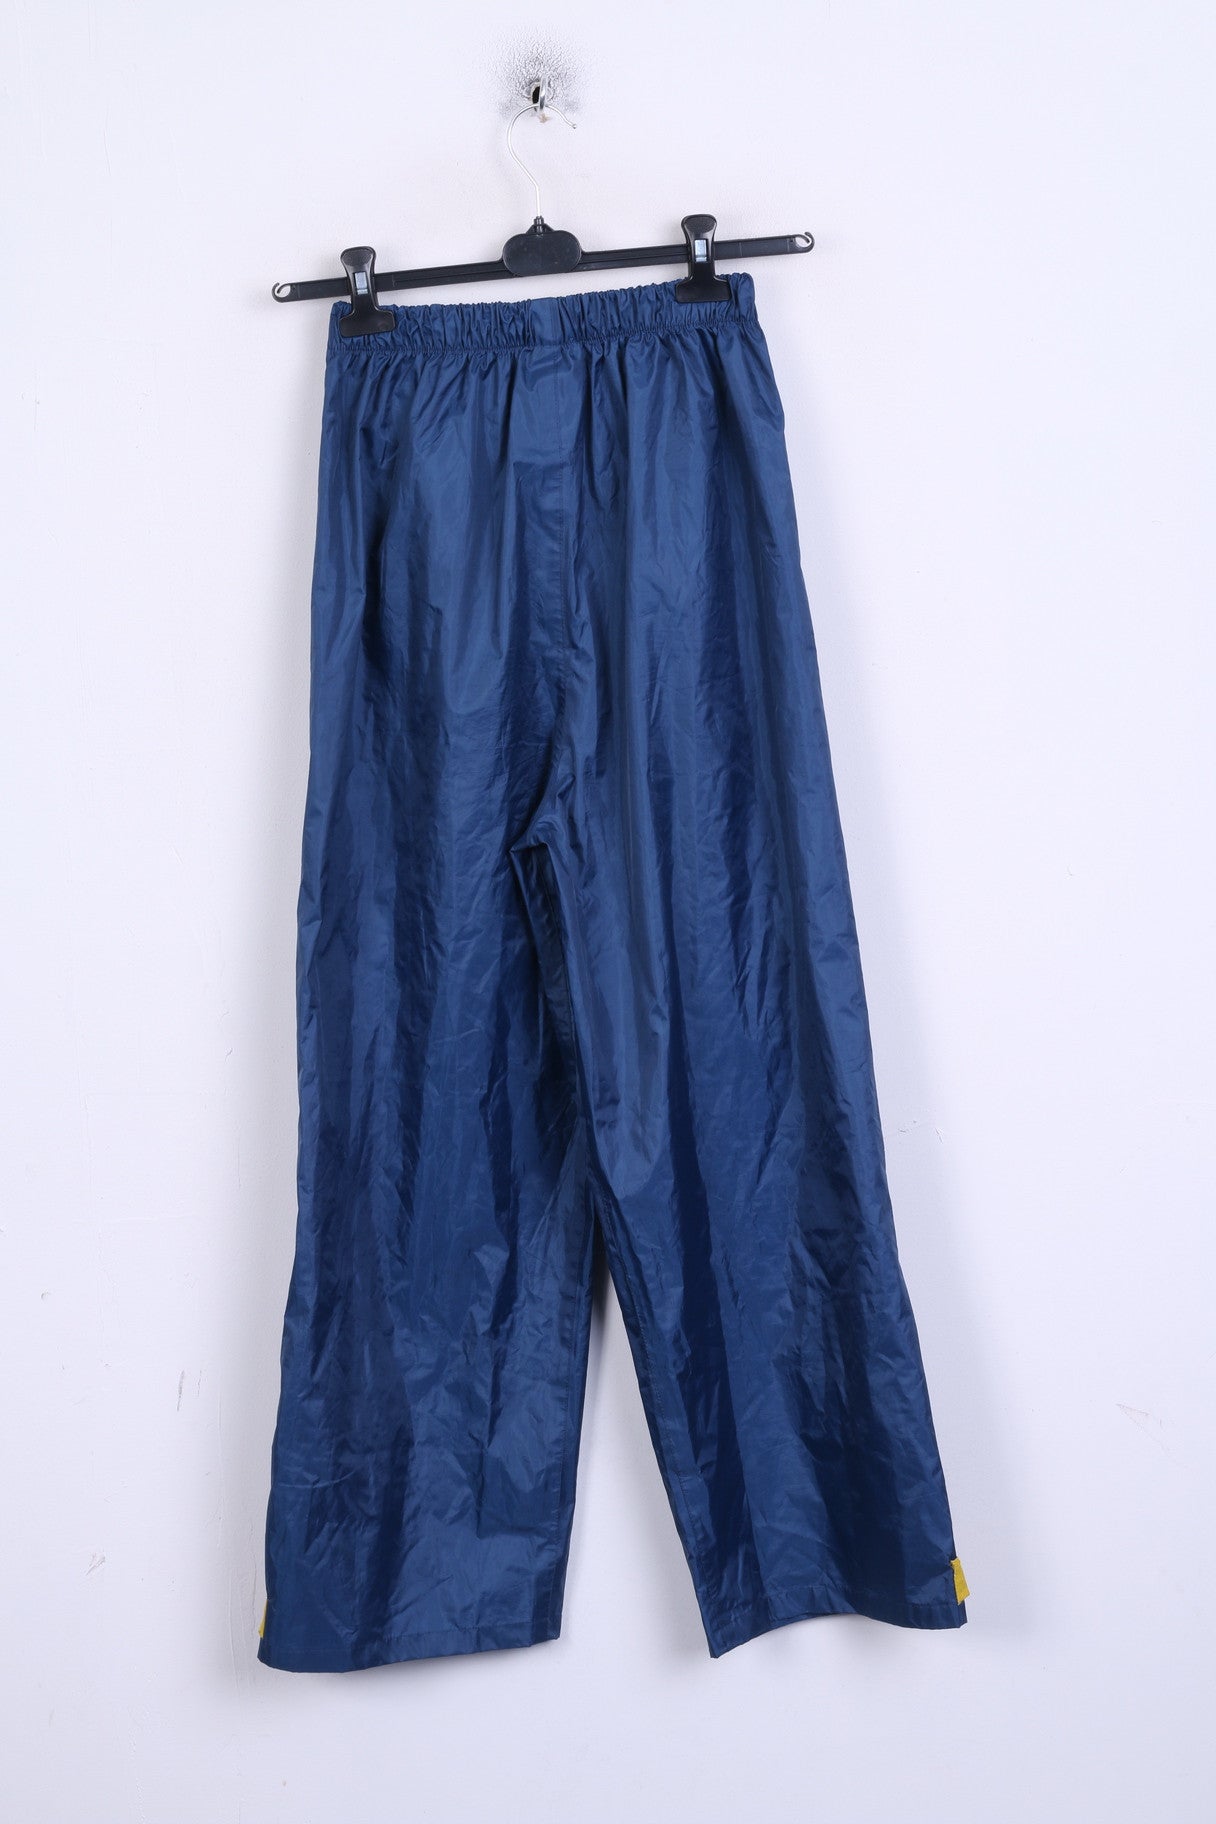 PROFIL Homme 176 Vintage Pantalon Nylon Imperméable Sport